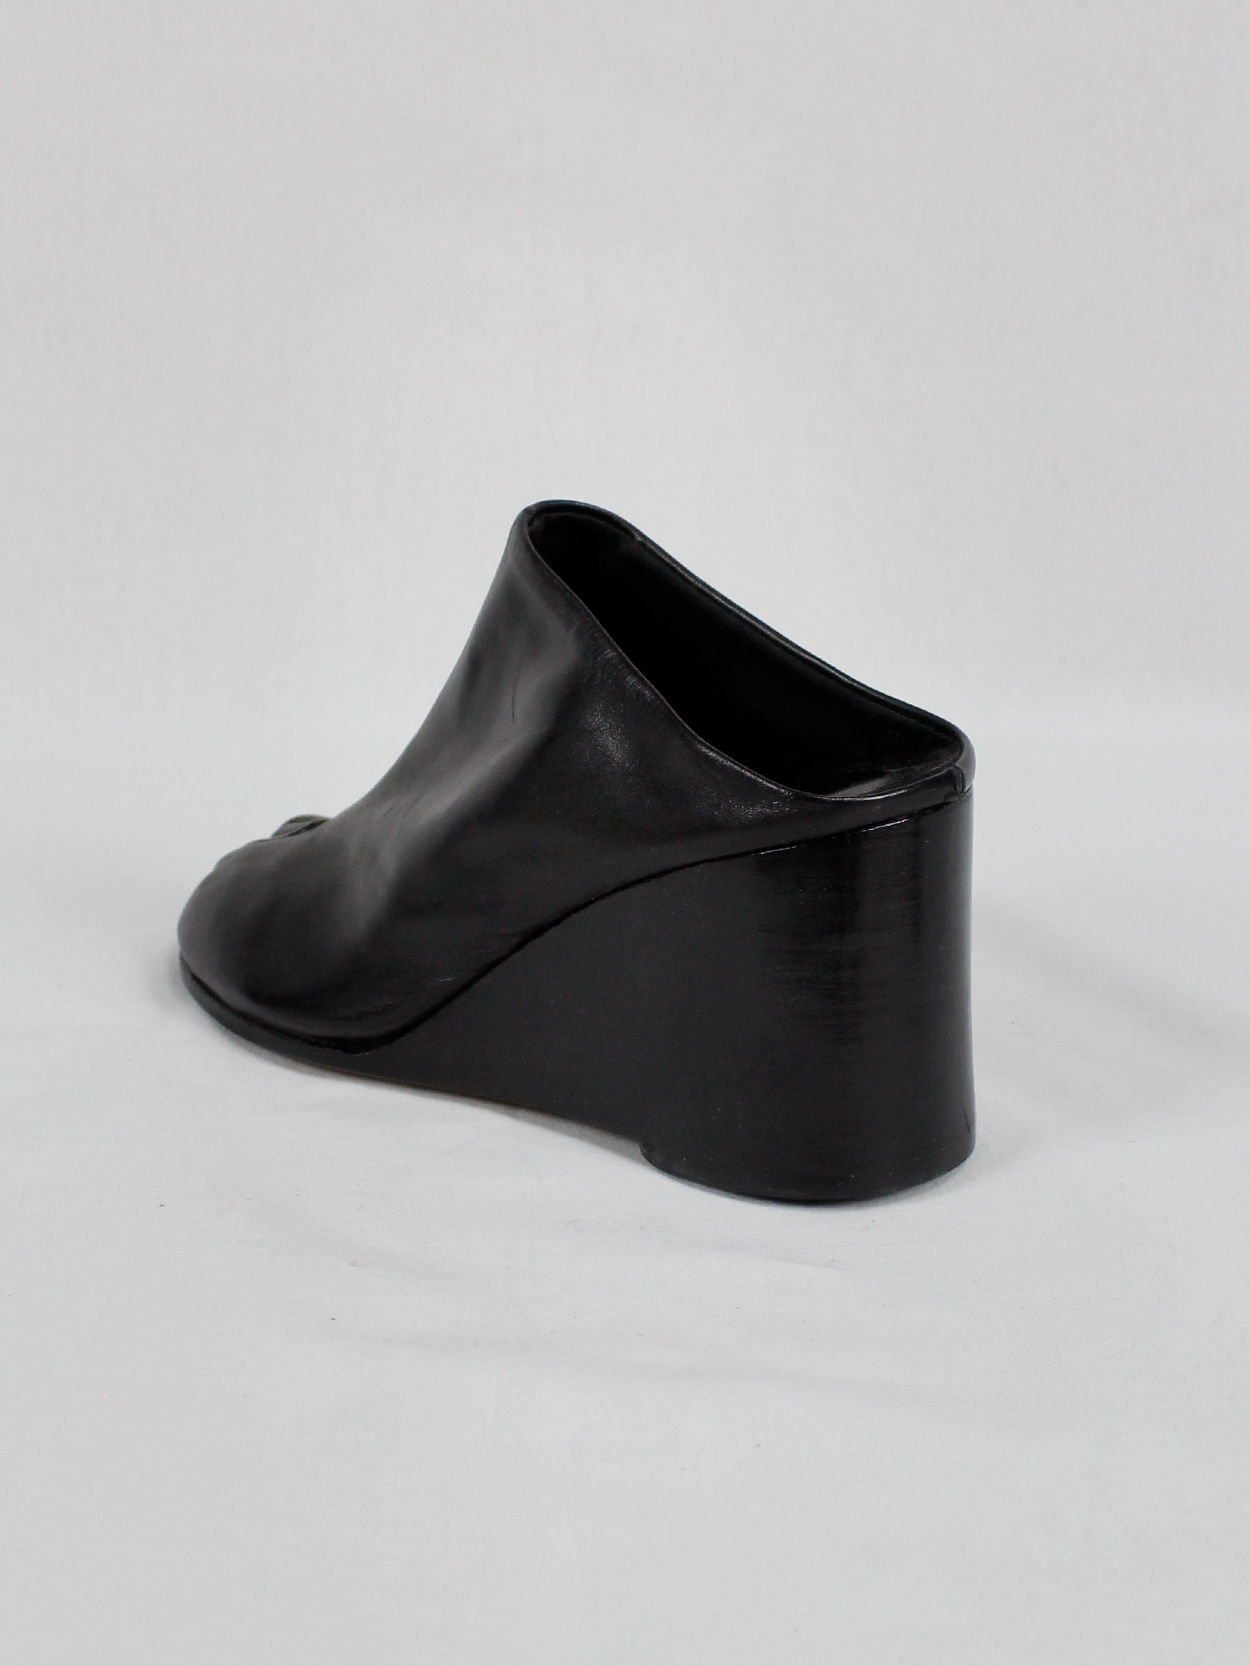 Maison Martin Margiela black tabi slippers with wedge heel spring 2002 (16)